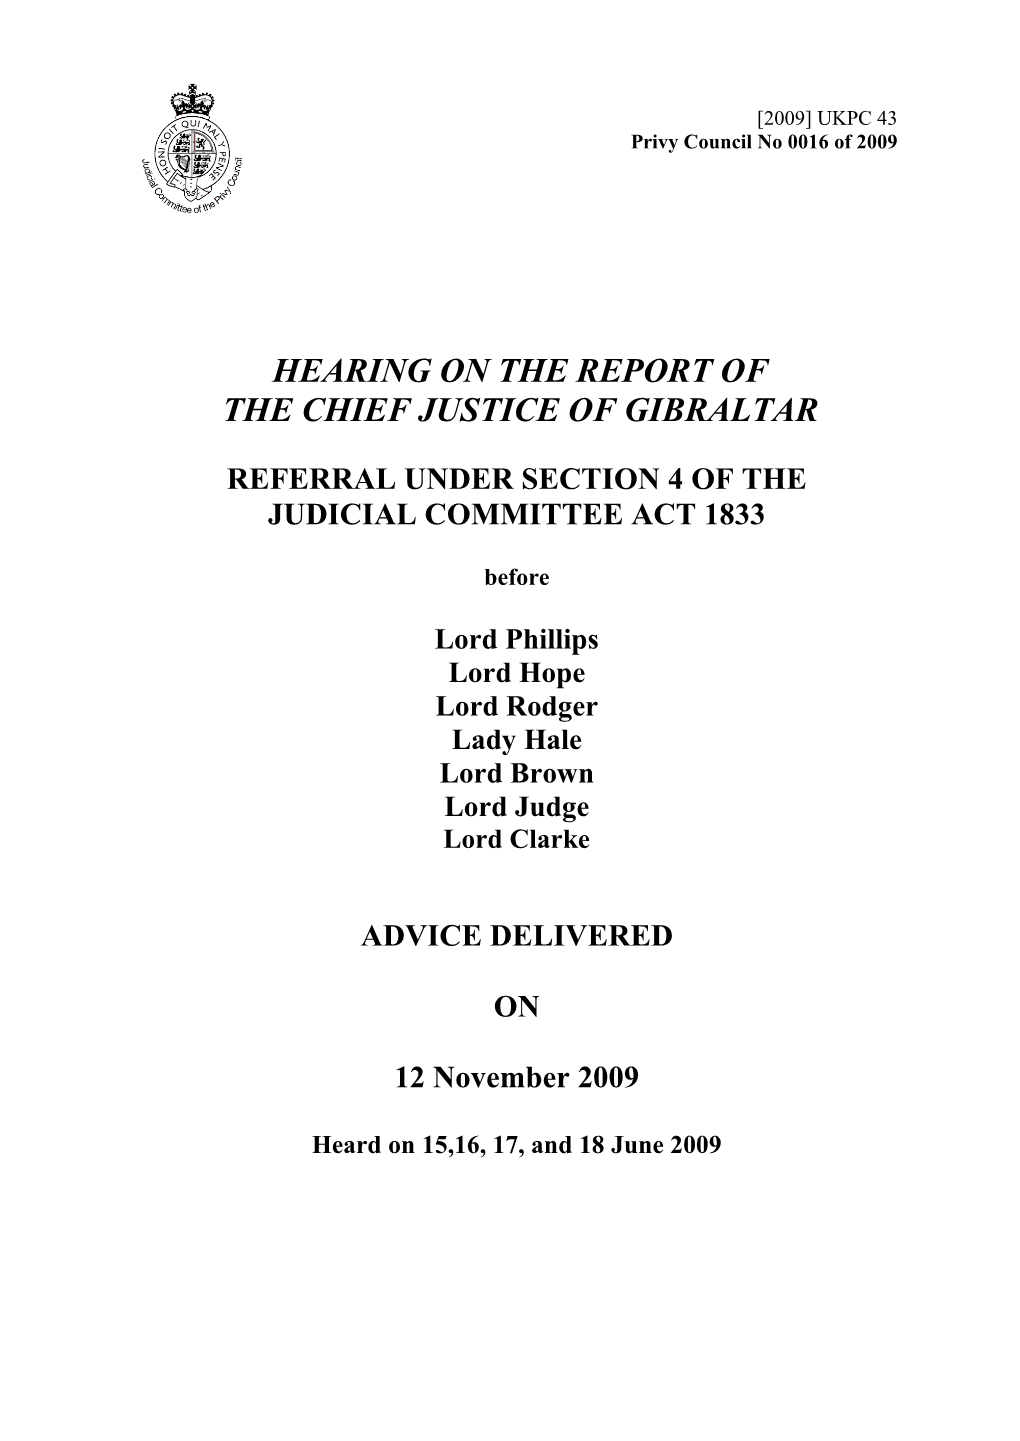 Judgment (PDF)